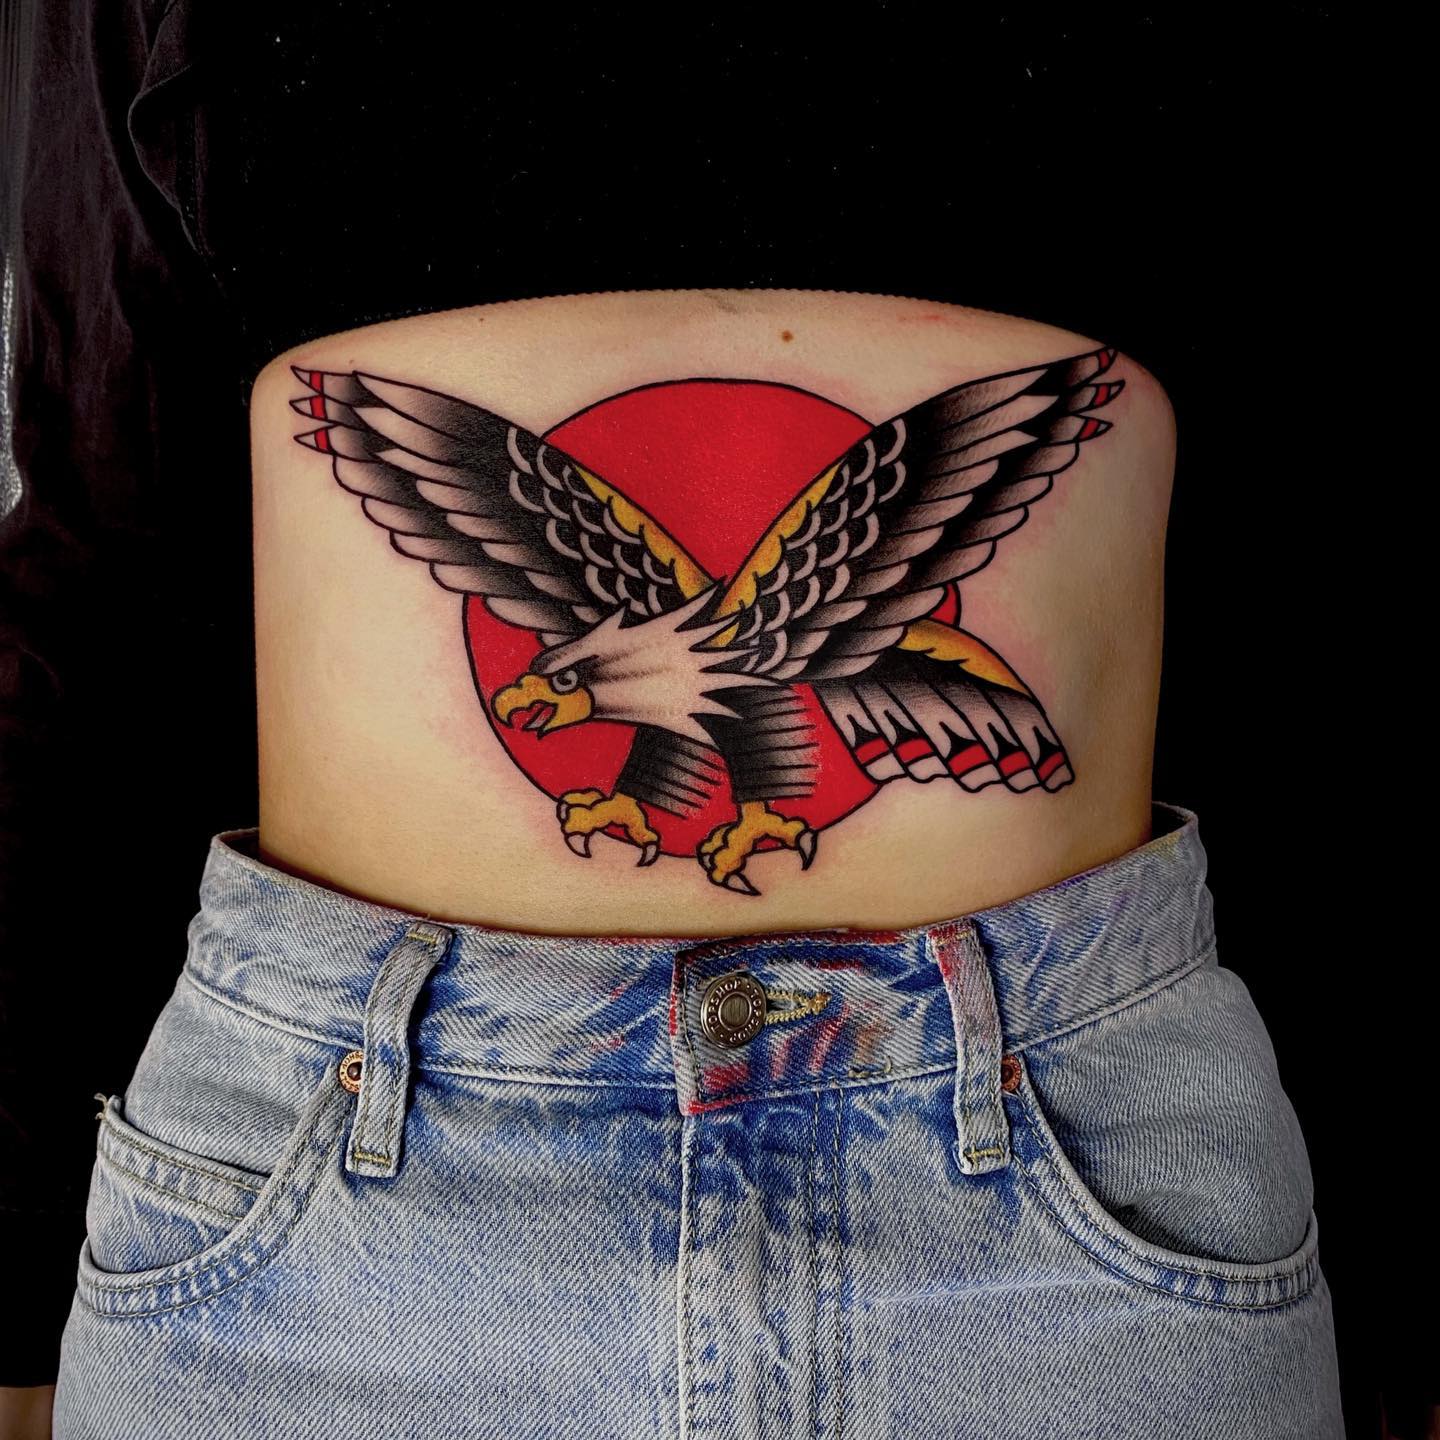 Traditional eagle tattoo by kbefftattoos